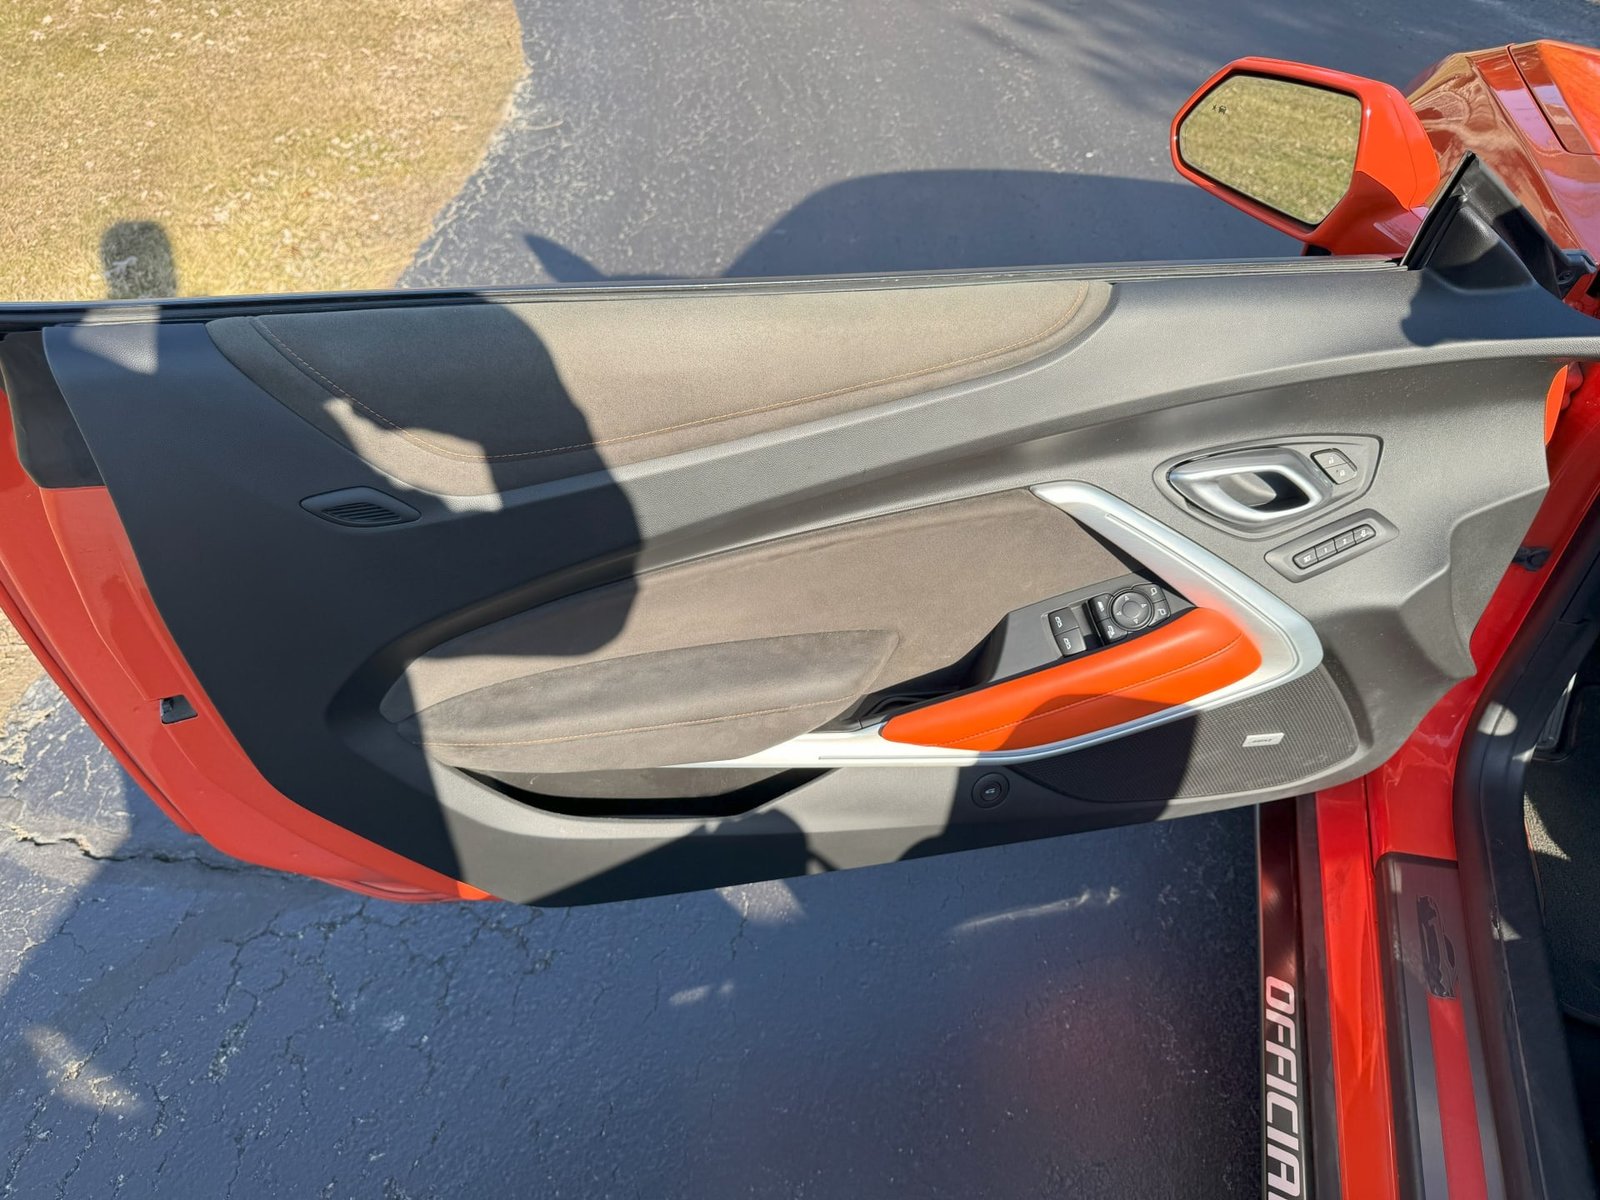 2018 Chevrolet Camaro Hot Wheels Indy 500 Edition Convertible (16)